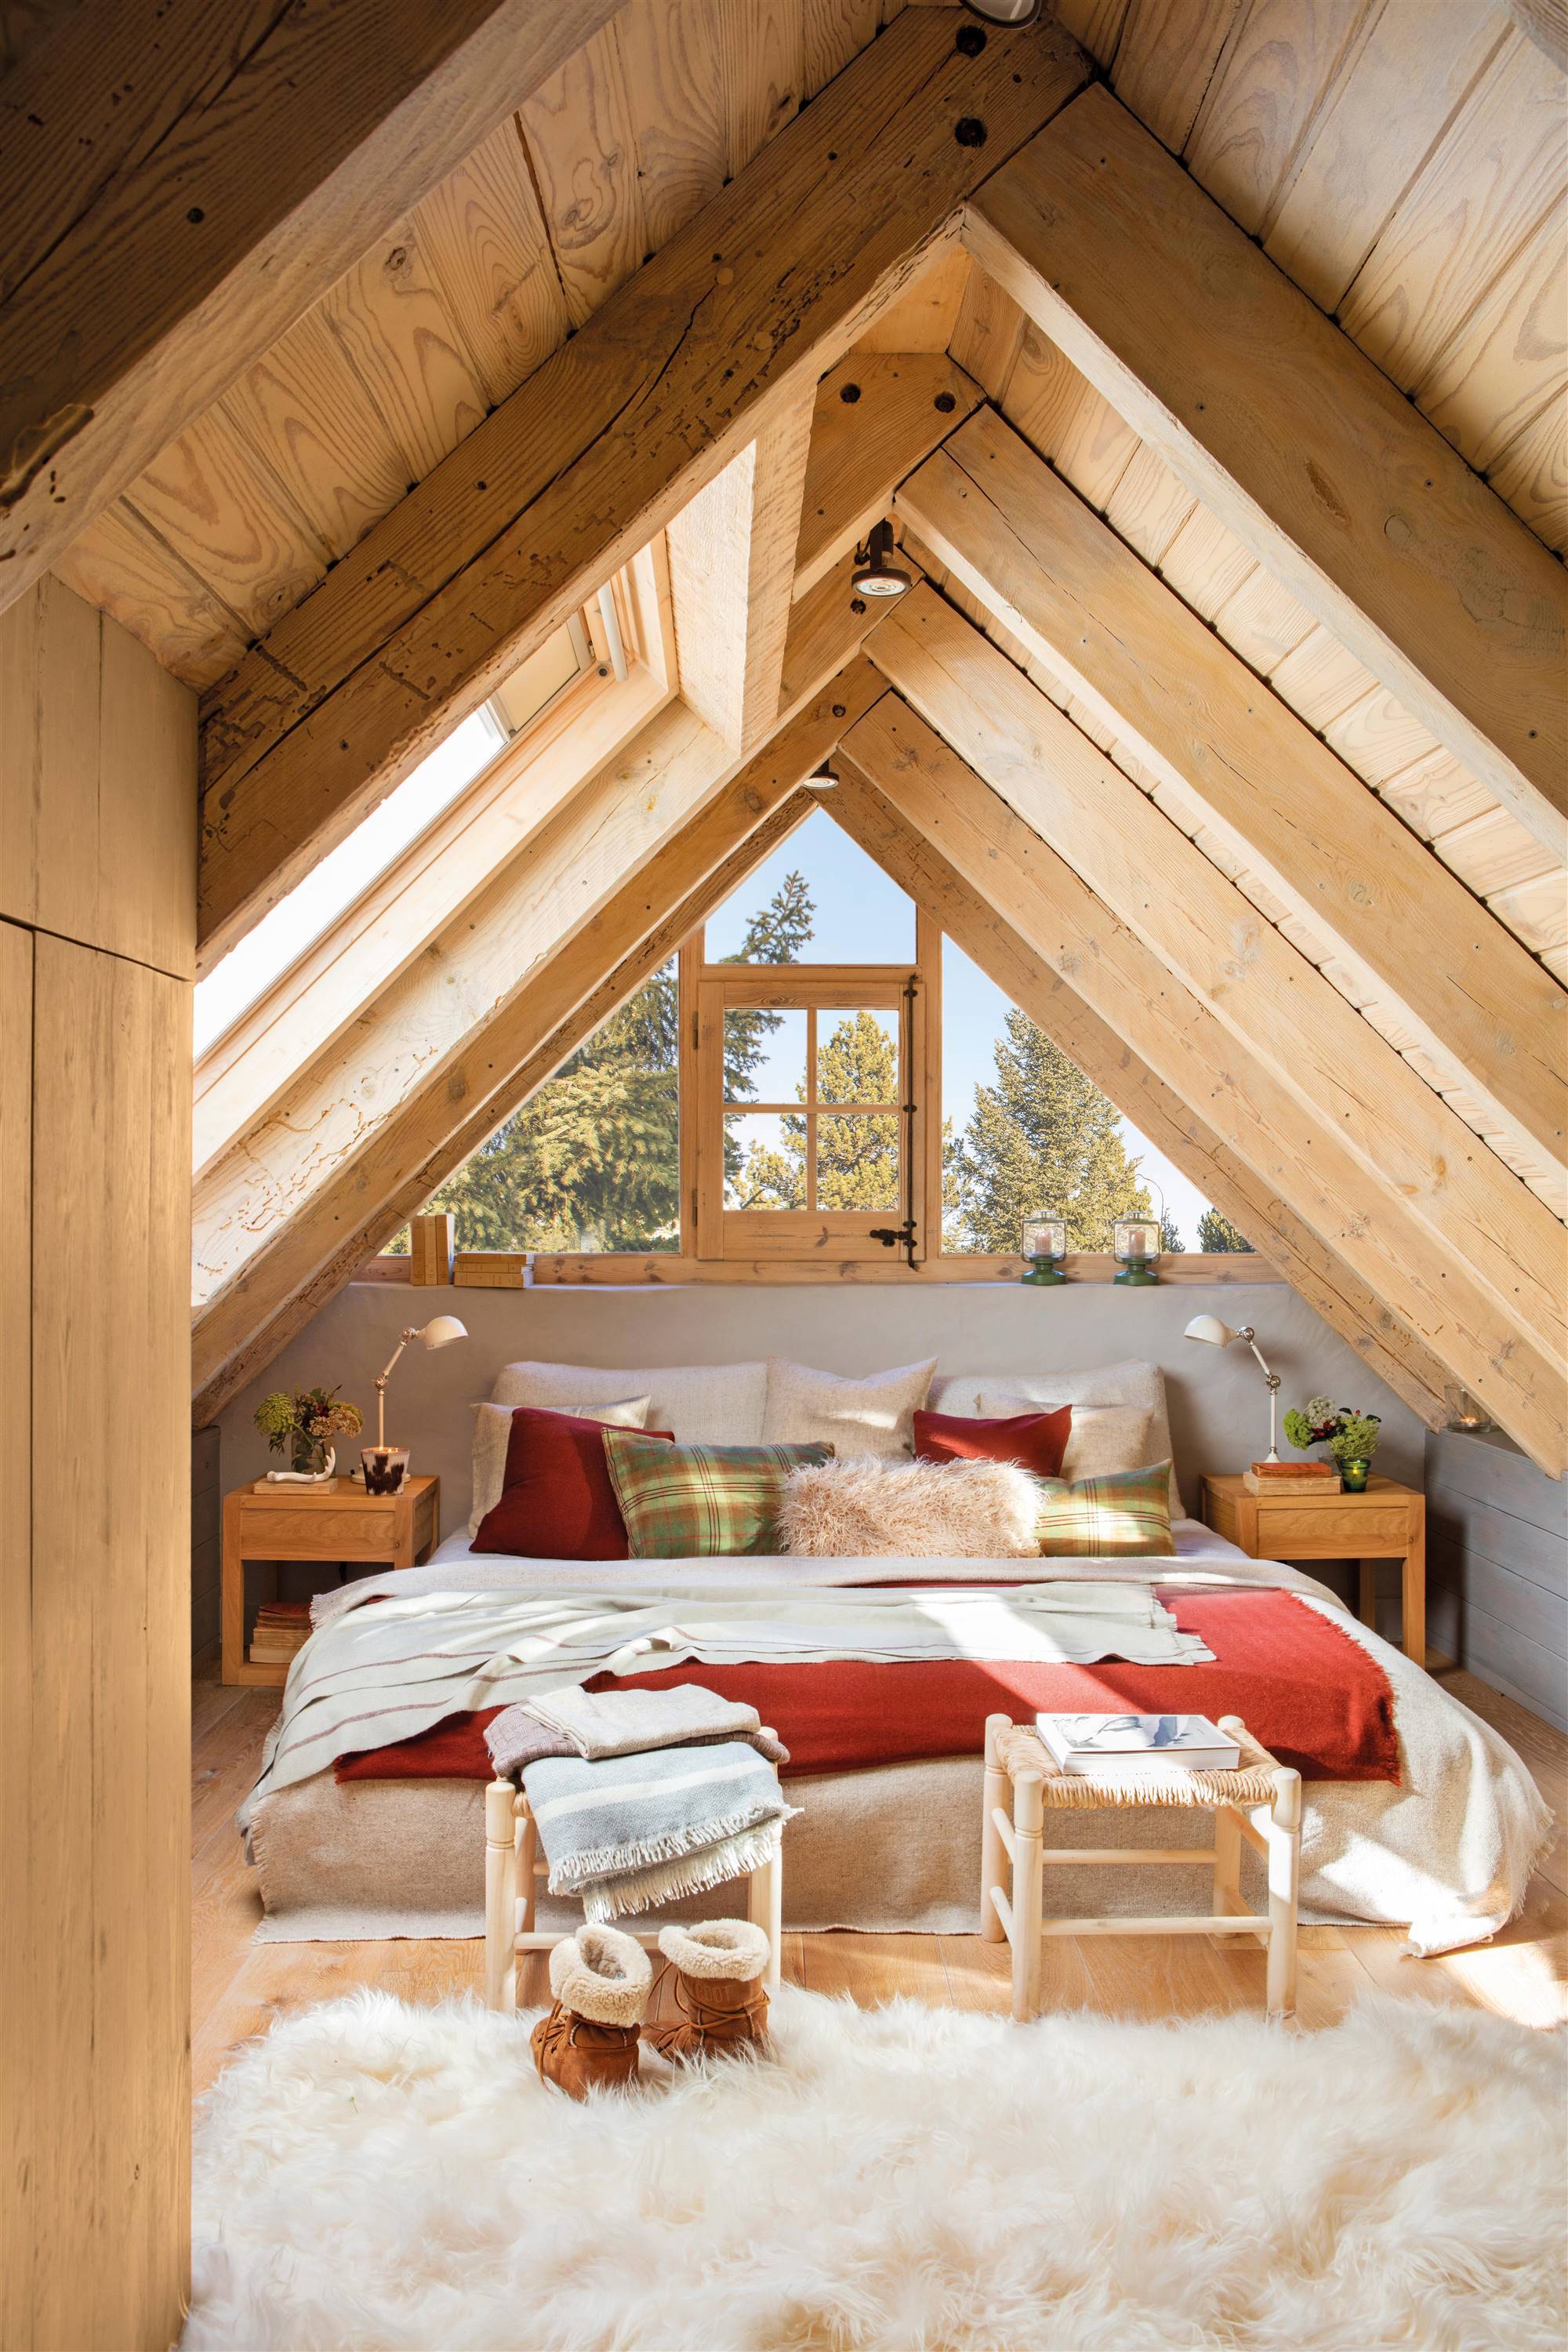 Dormitorio abuhardillado de madera.